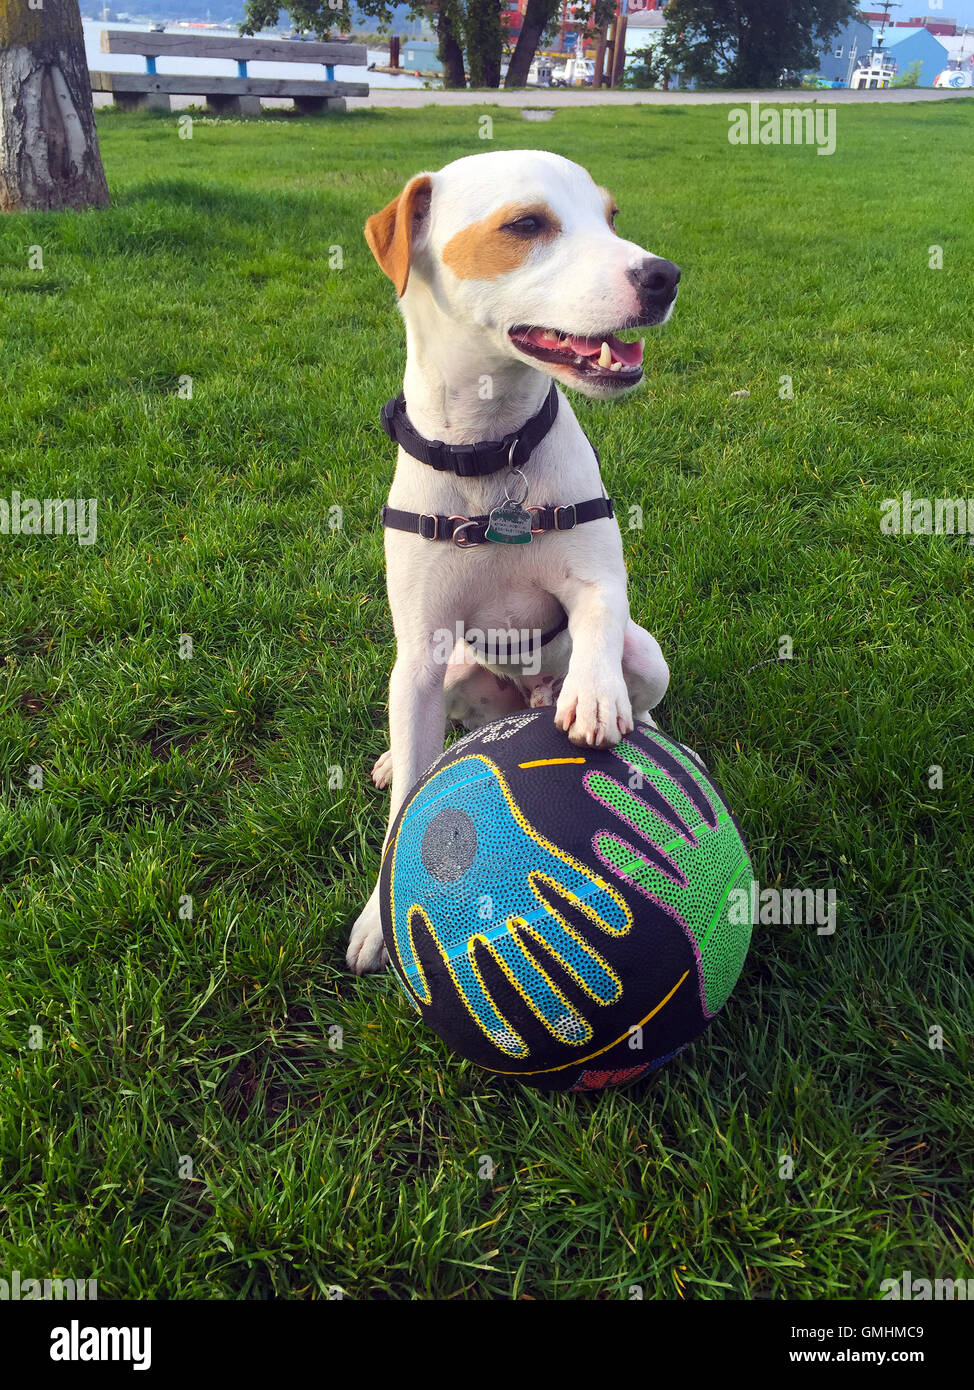 Mac (Macchiato) süße Jack-Russell-Terrier Hund gerade Prellen Basketball aus seiner Nase Krabbe Park, Vancouver, BC Kanada-2 Stockfoto